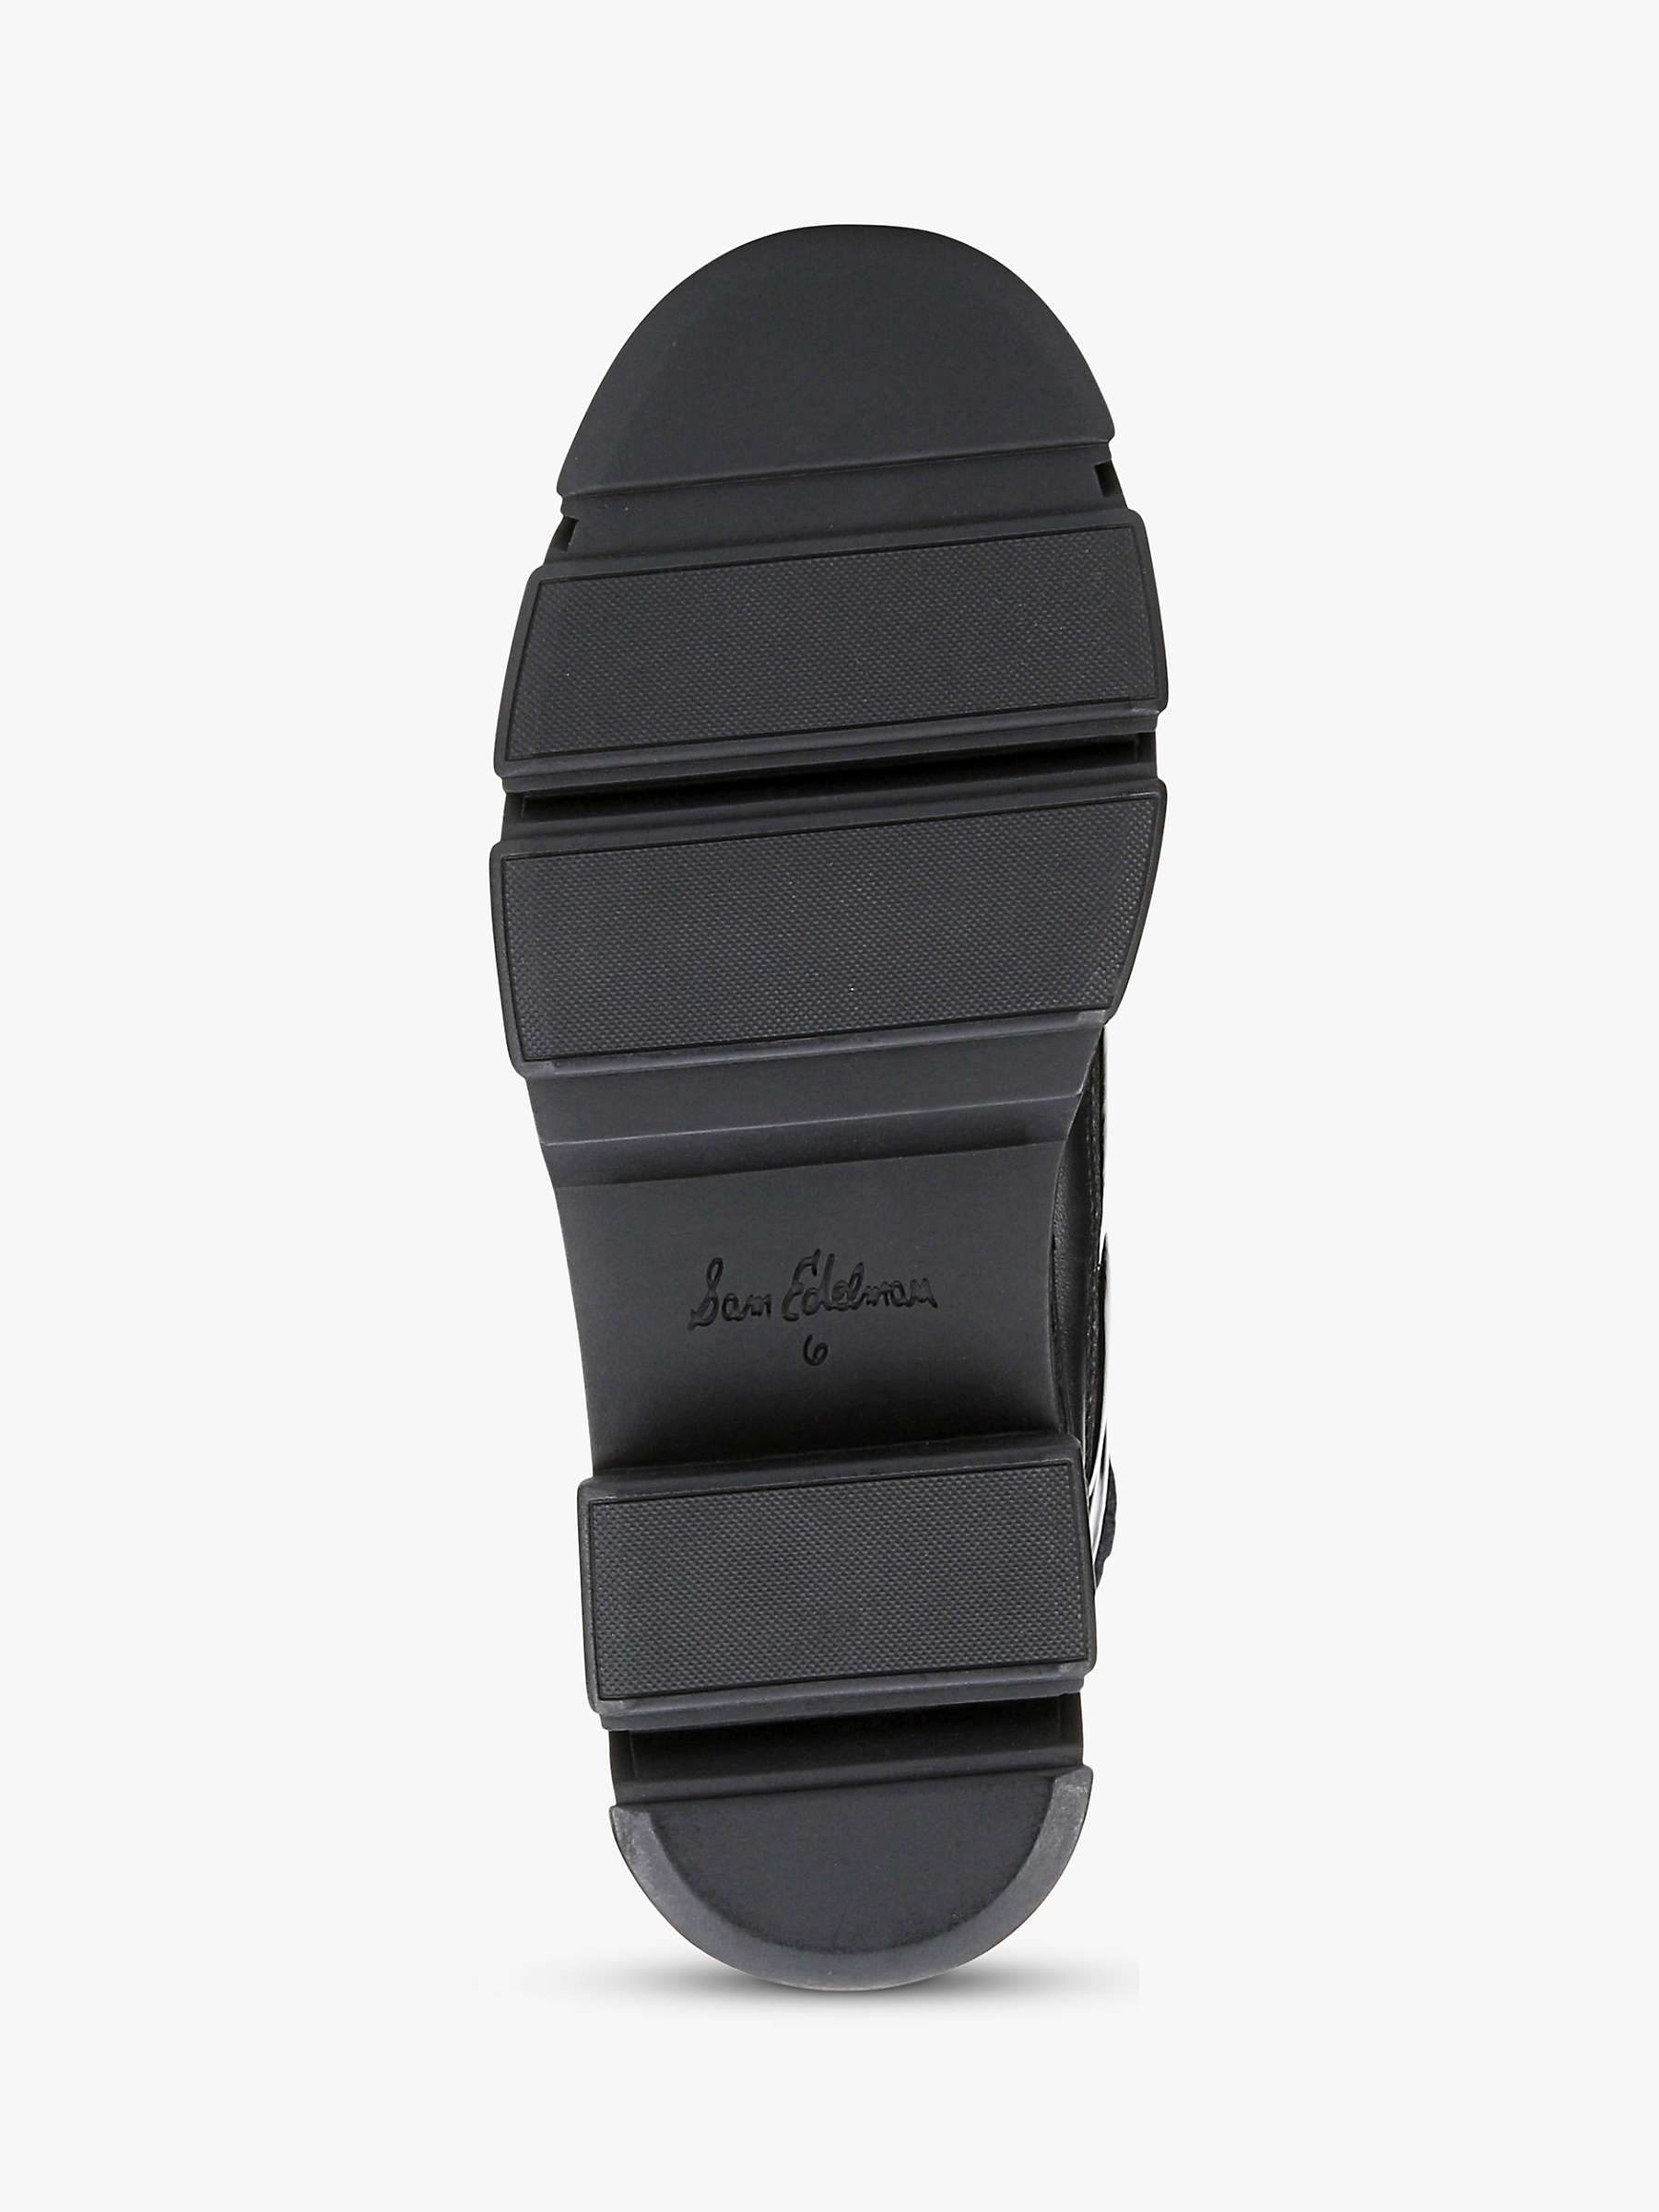 Buy Sam Edelman Tabitha Snow Boots, Black Online at johnlewis.com